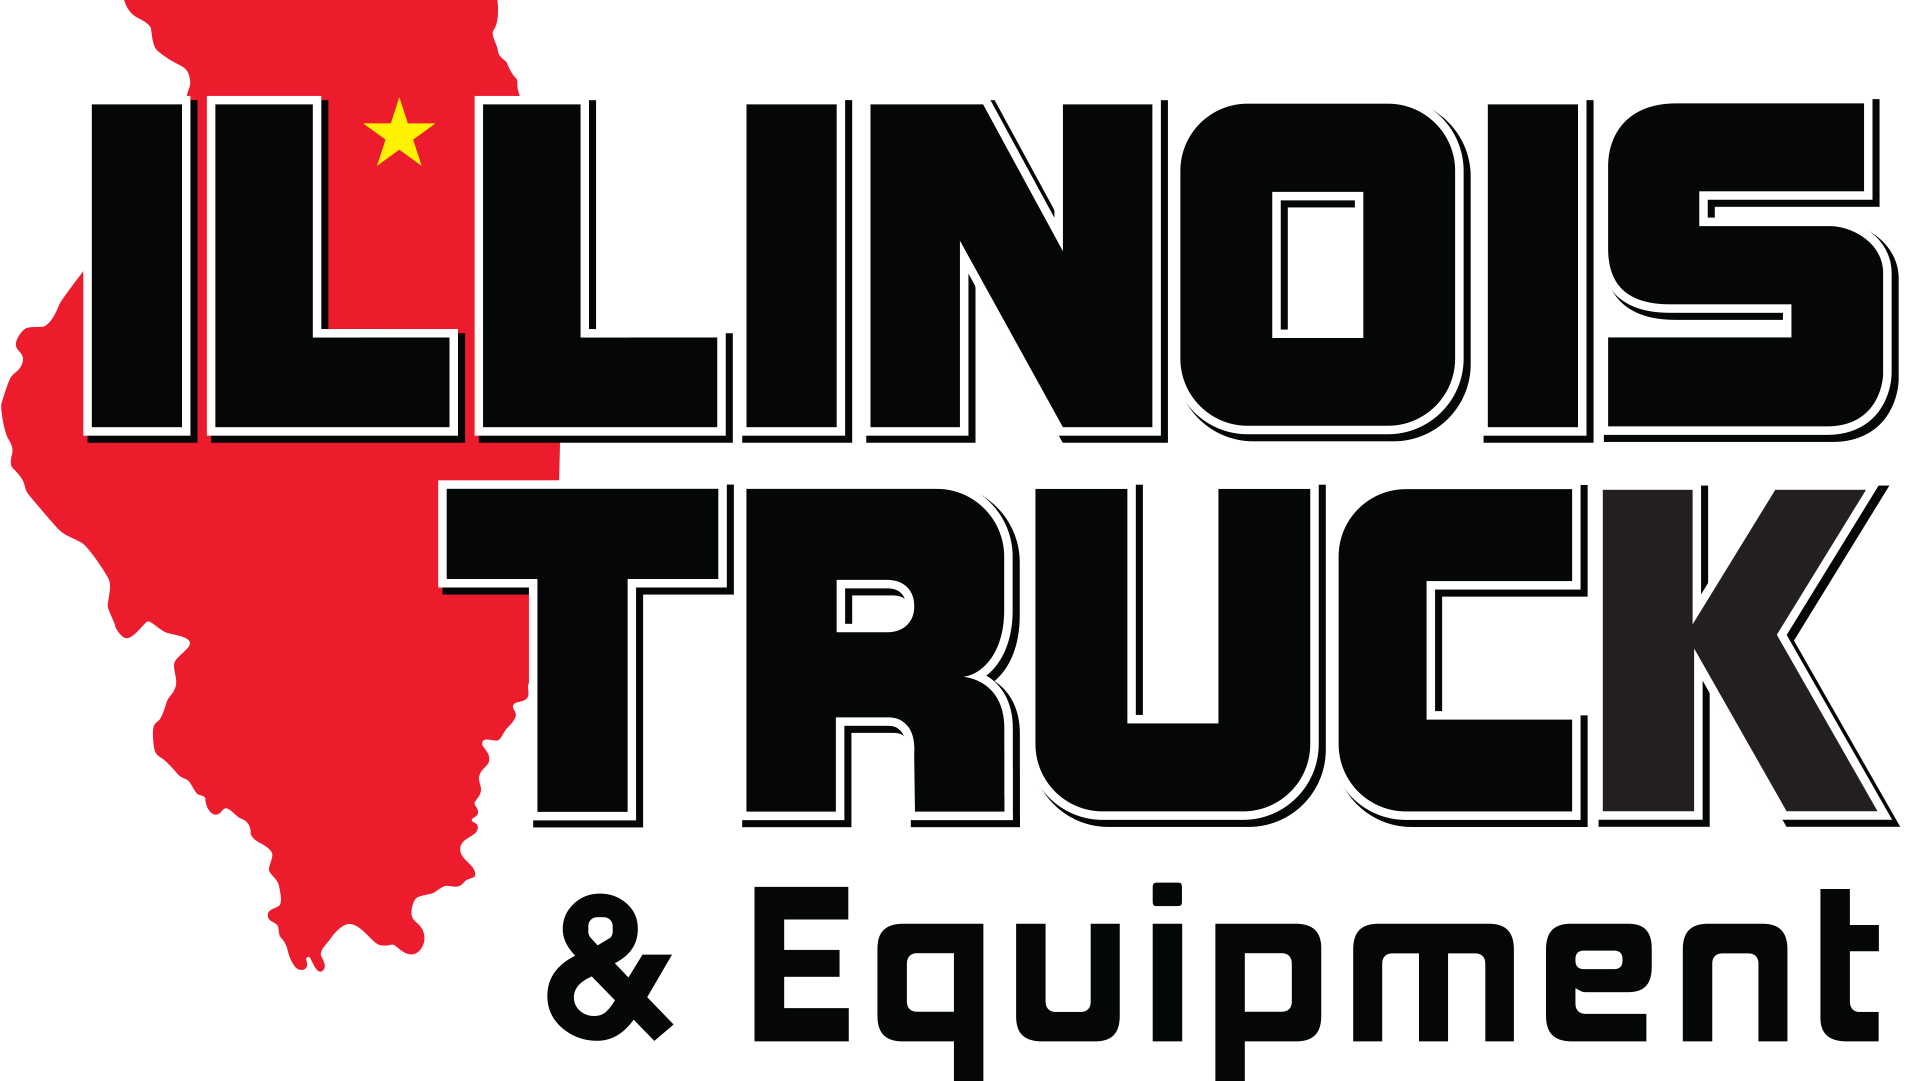 Illinois Truck & Equipment